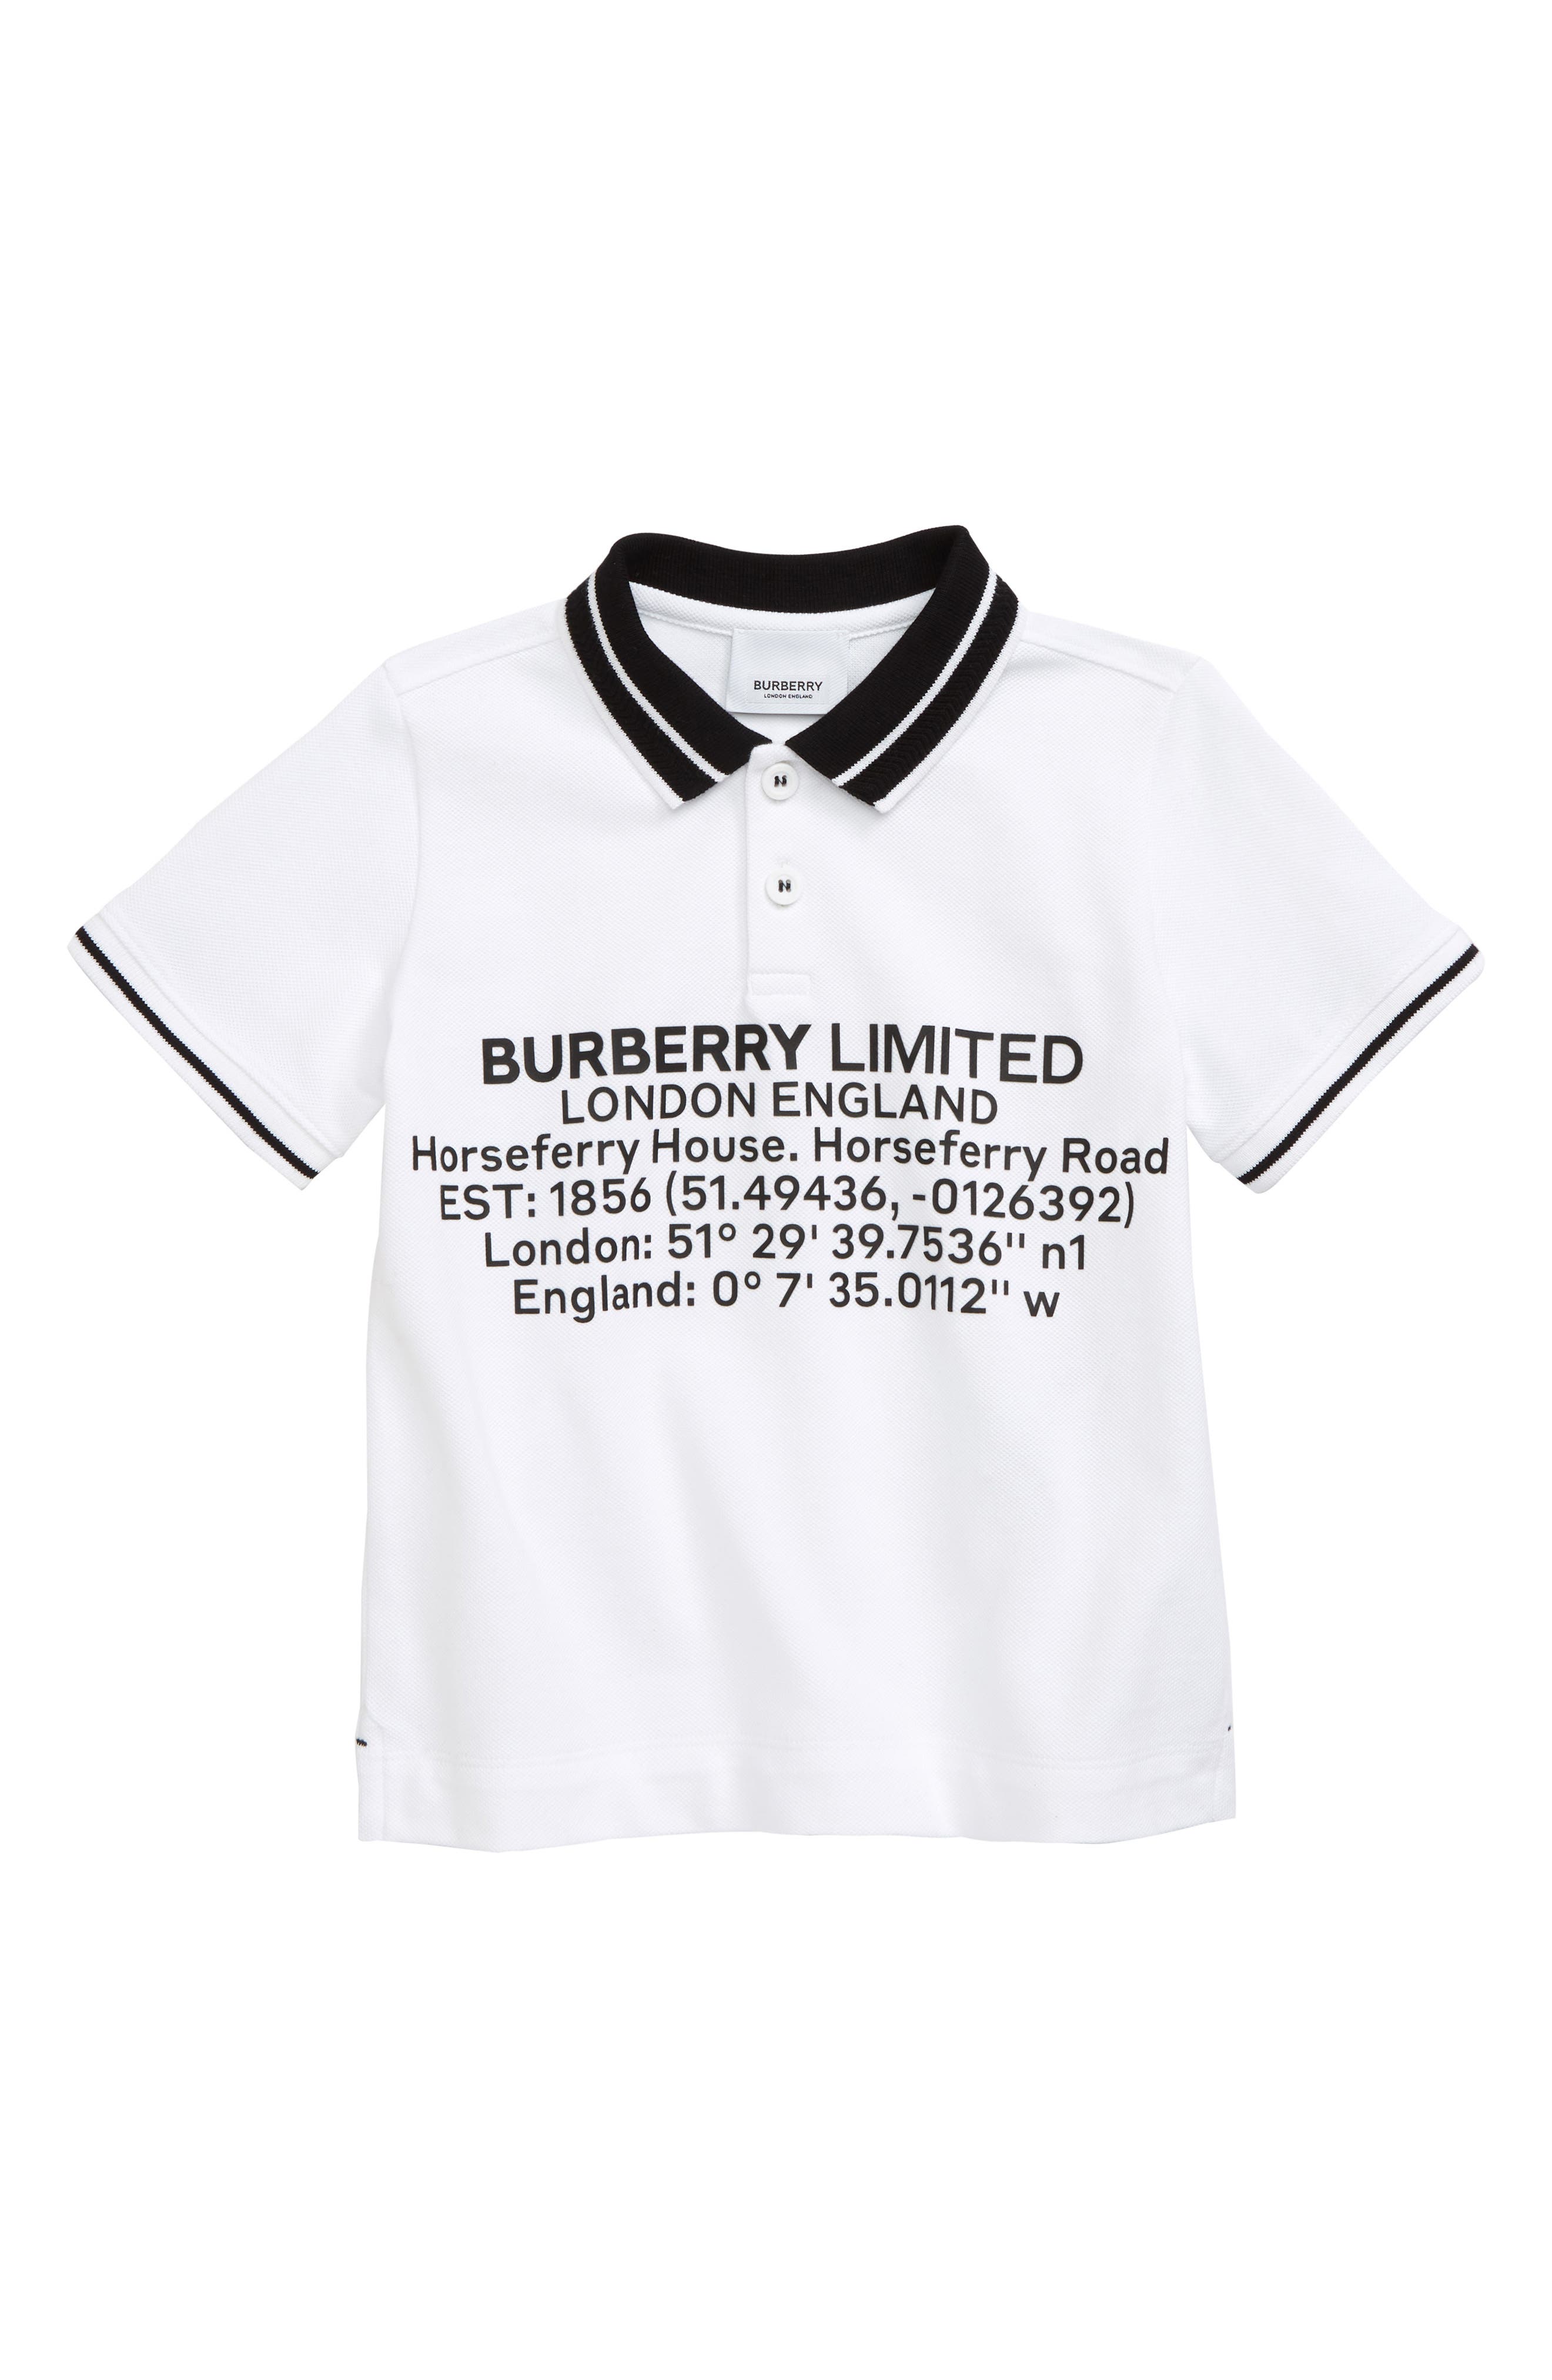 burberry baby boy t shirt